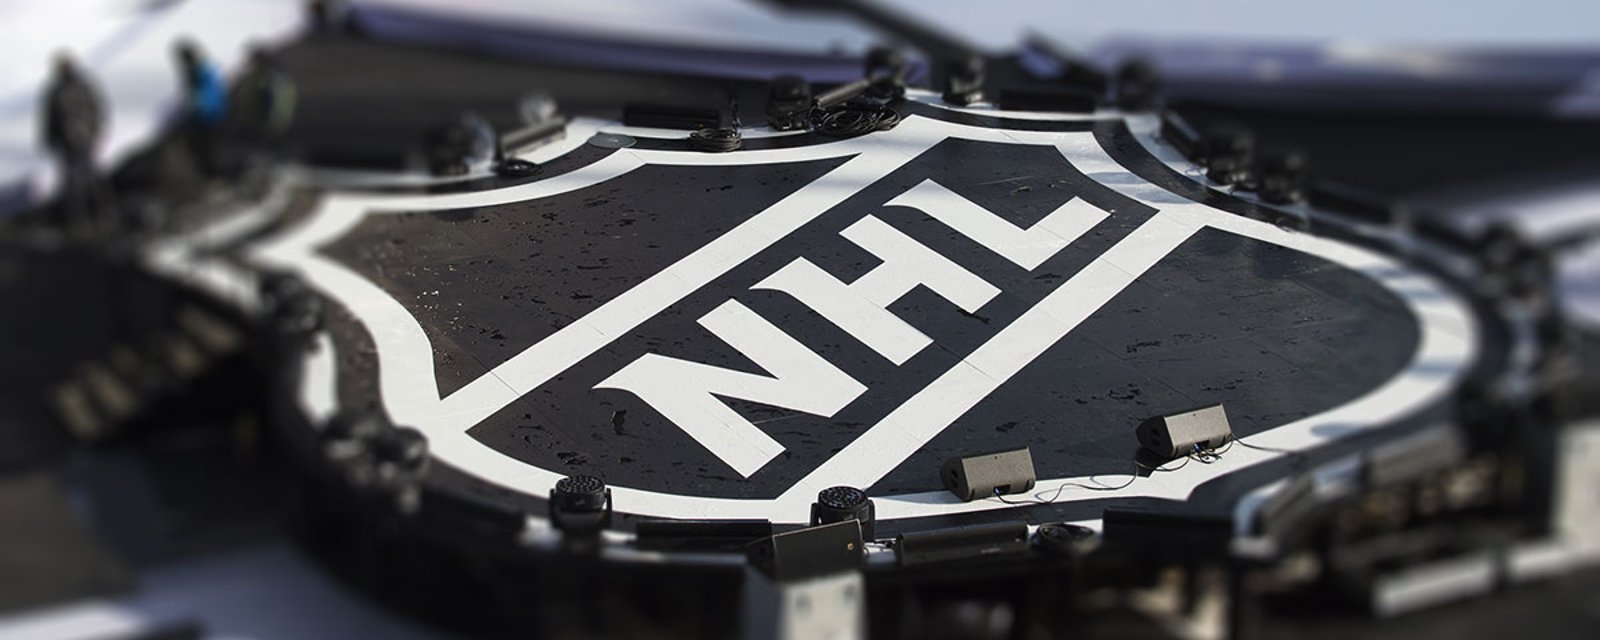 NHLPA and NHL said yes, officials said ''No way''. 